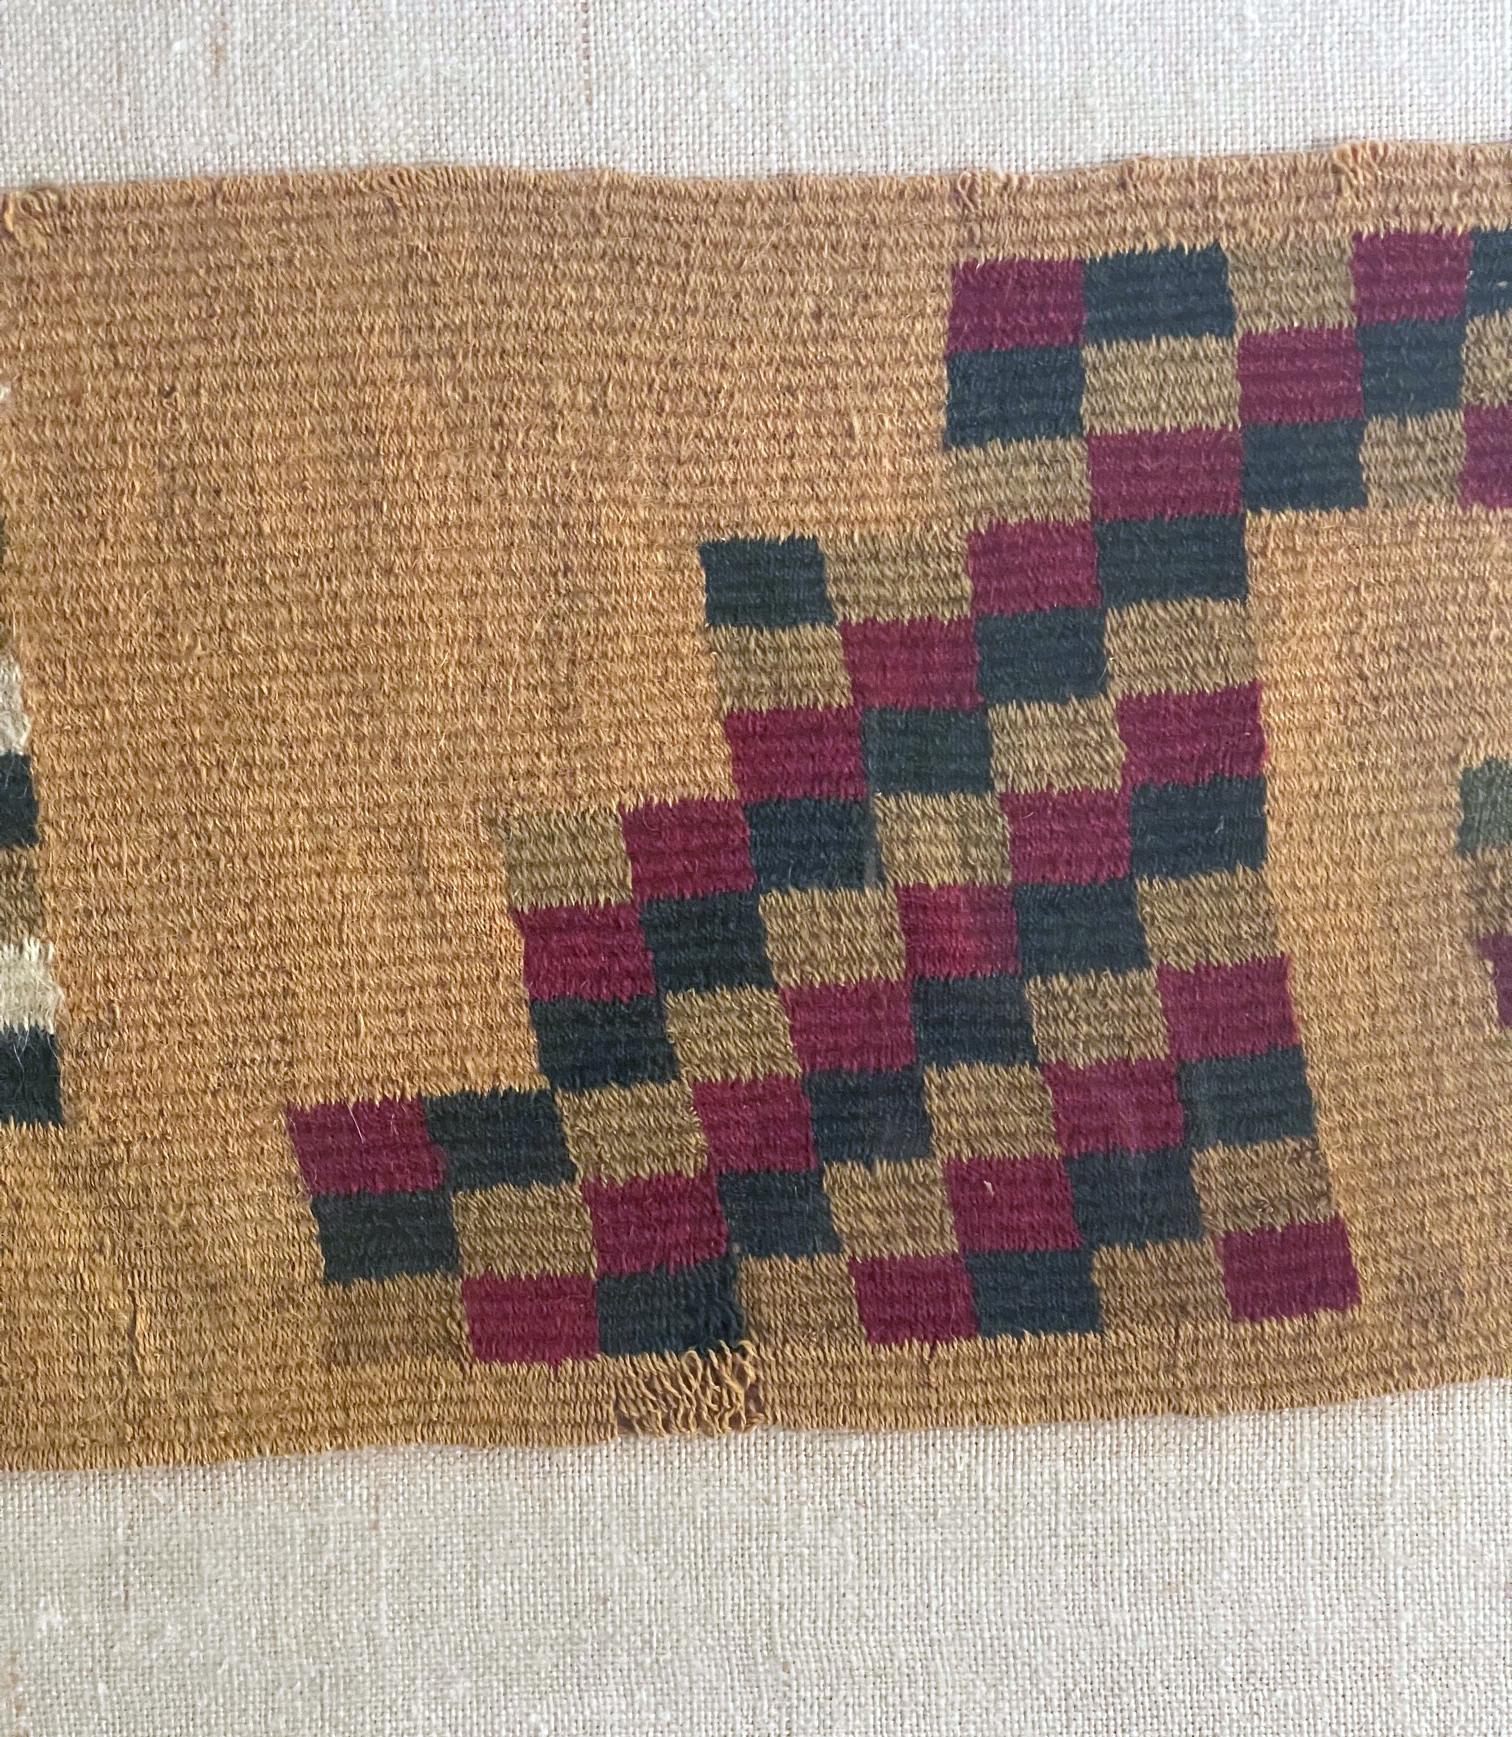 Two Frame Pre-Columbian Woven Textile Fragments Inca Culture Peru In Good Condition For Sale In Atlanta, GA